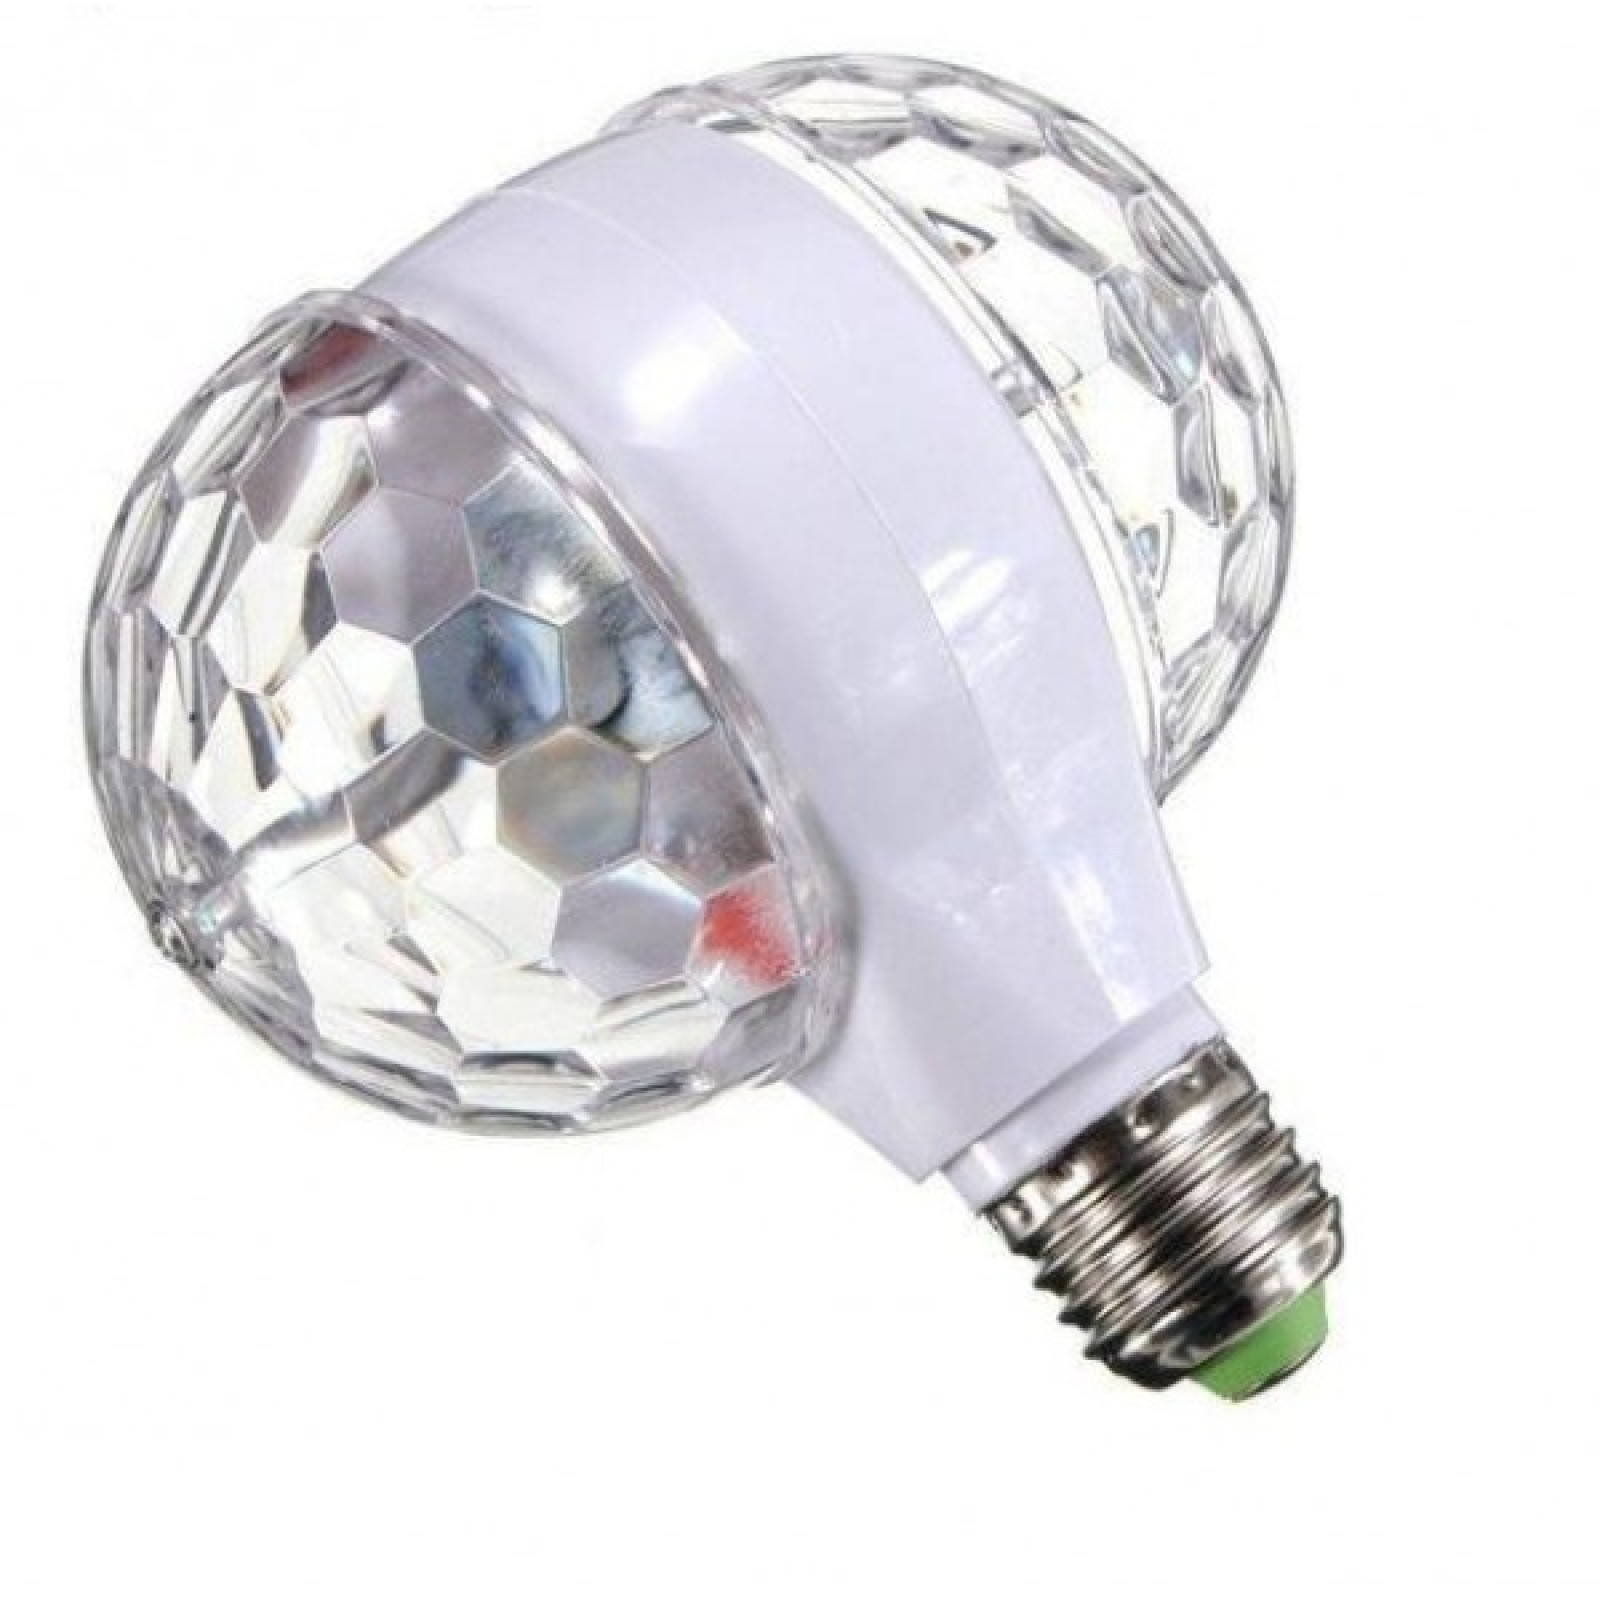 Диско лампа вращающаяся для вечеринок двойная LED lamp Leiwen UKC AG SMQ01 152589